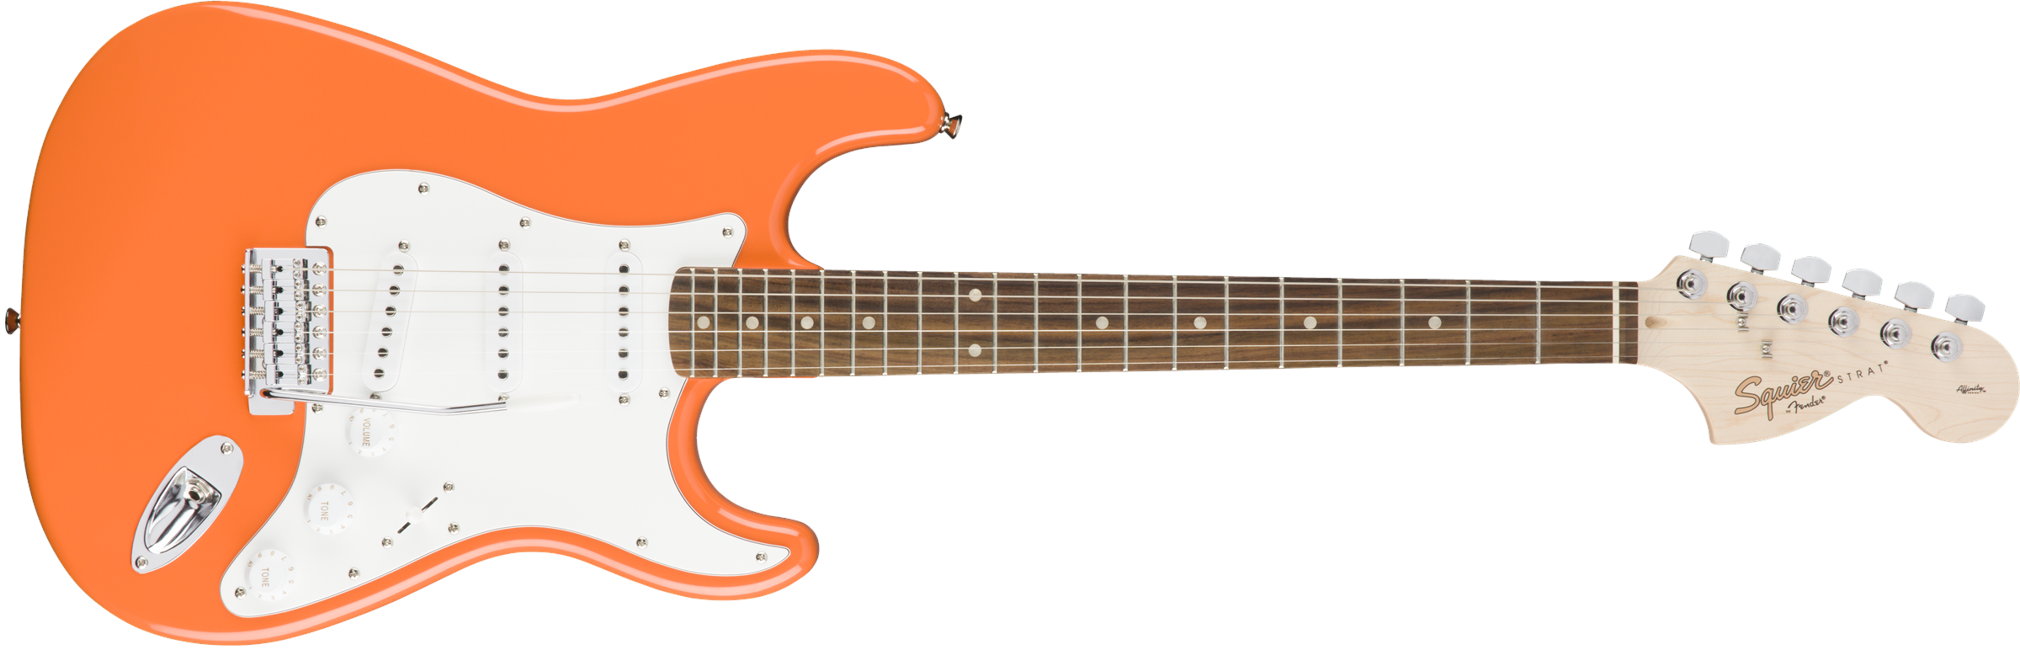 Squier By Fender - Affinity Stratocaster - Elektrisk Guitar (Competition Orange)